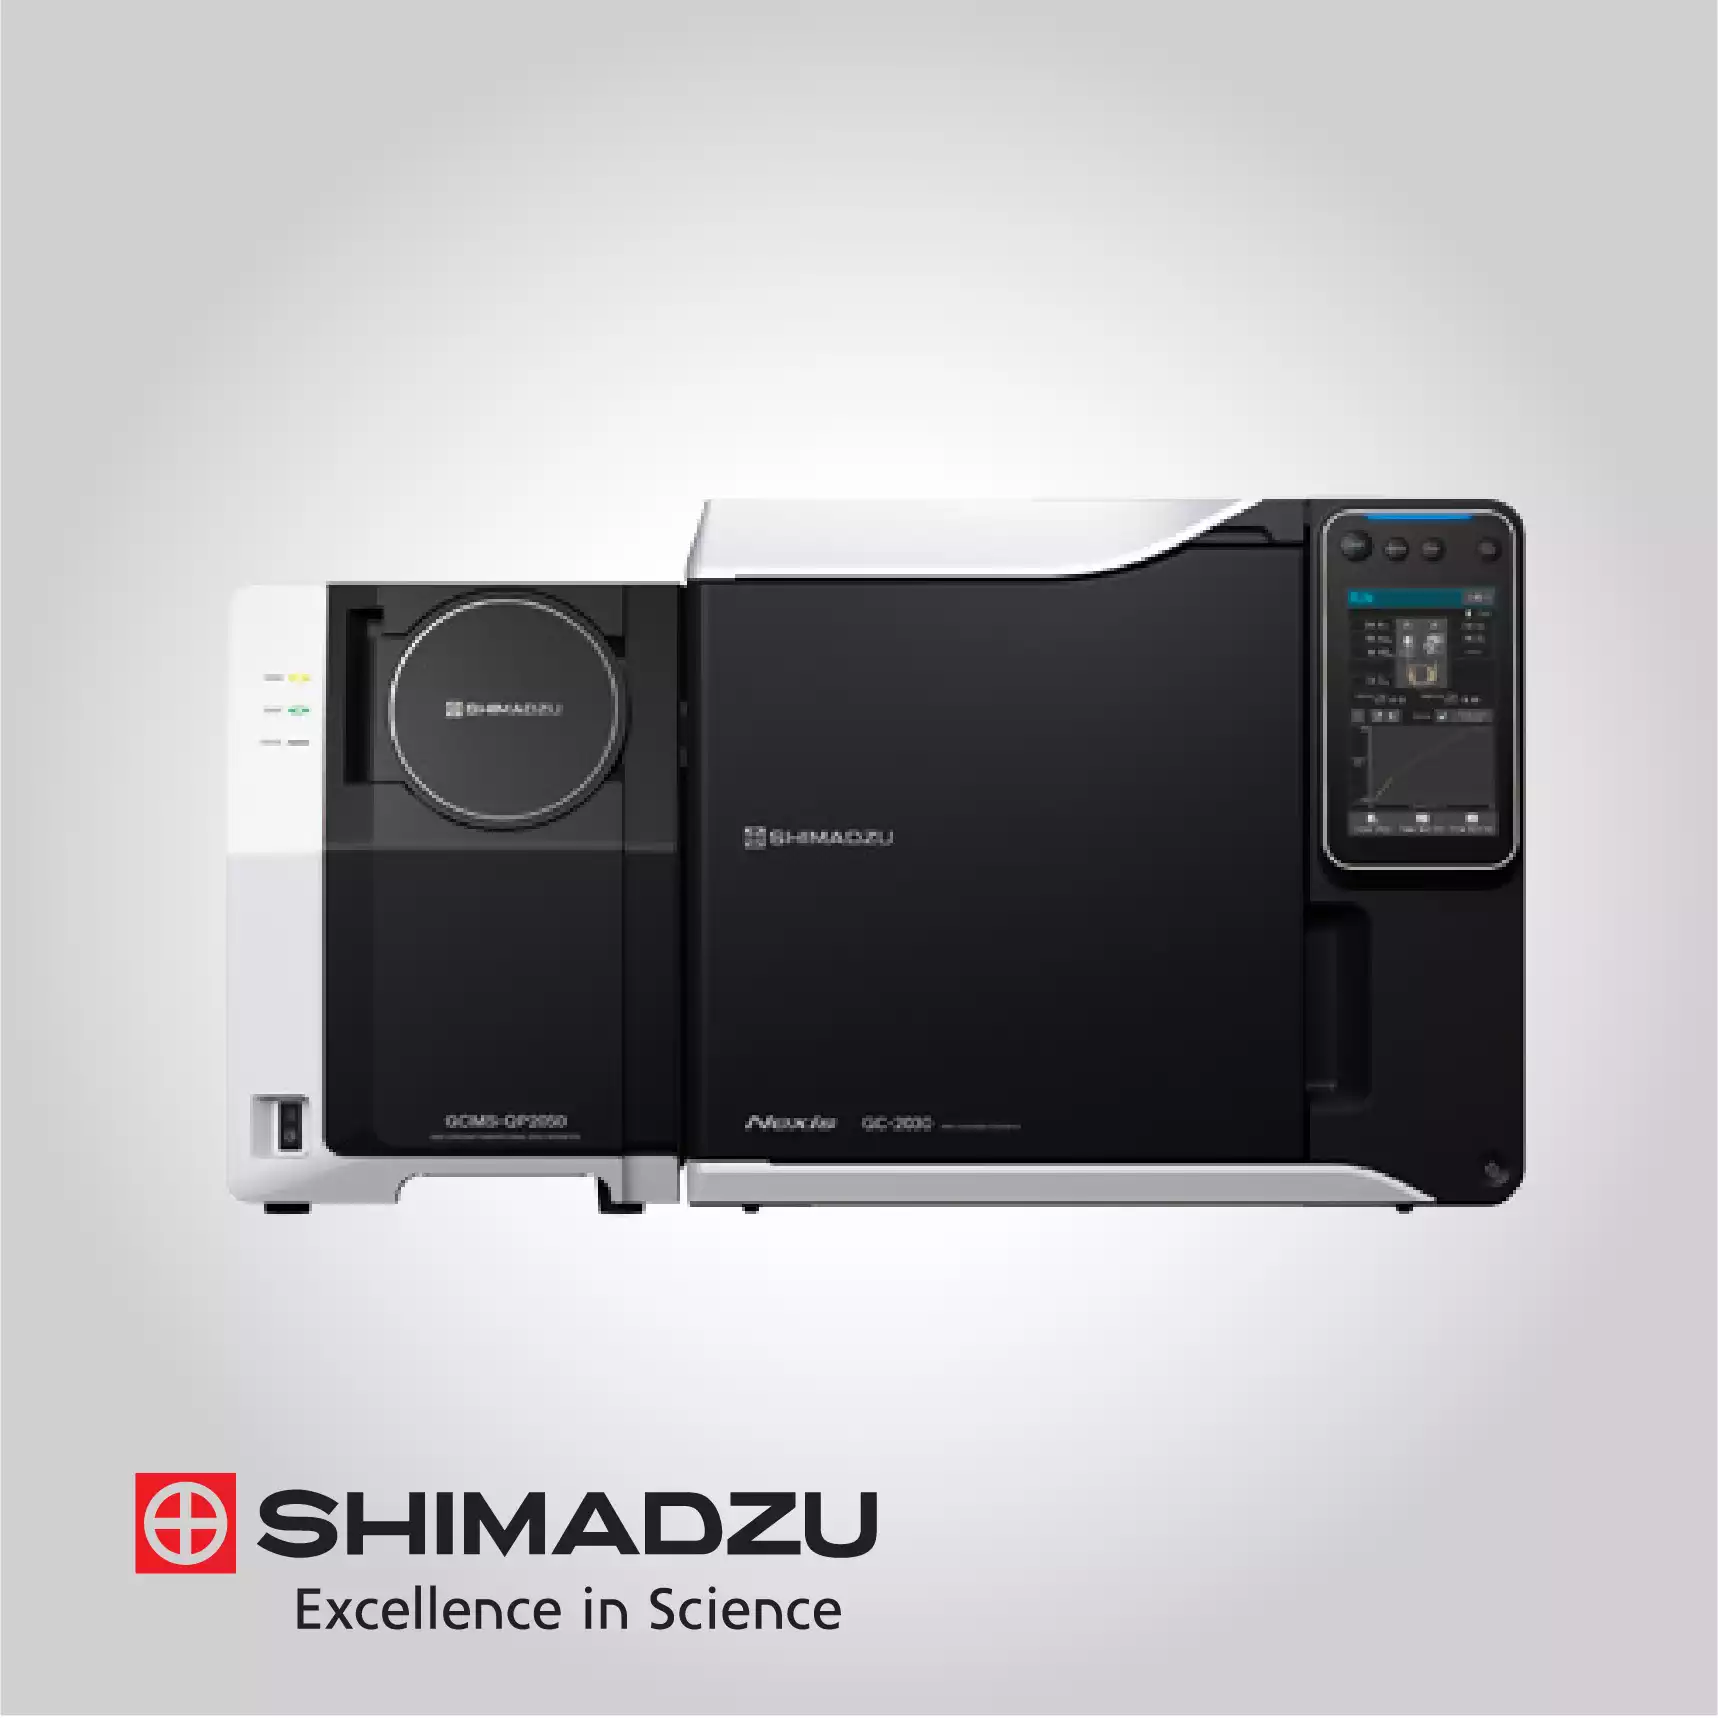 Shimadzu GCMS-QP2050